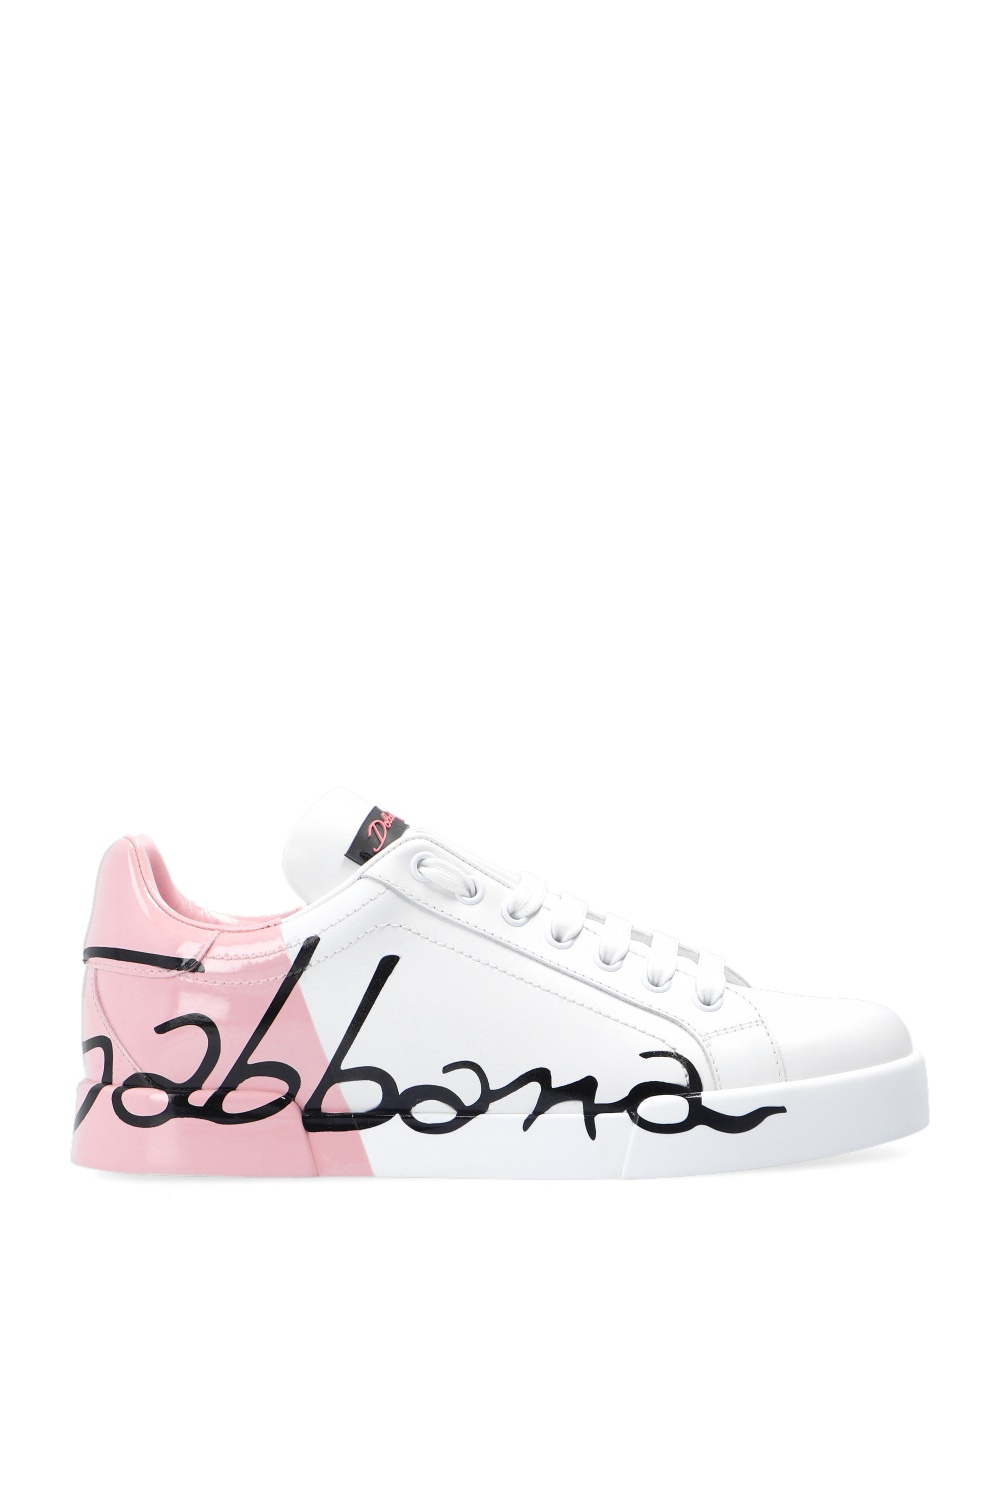 Dolce & Gabbana Sneakers with logo | Women's Shoes | Vitkac